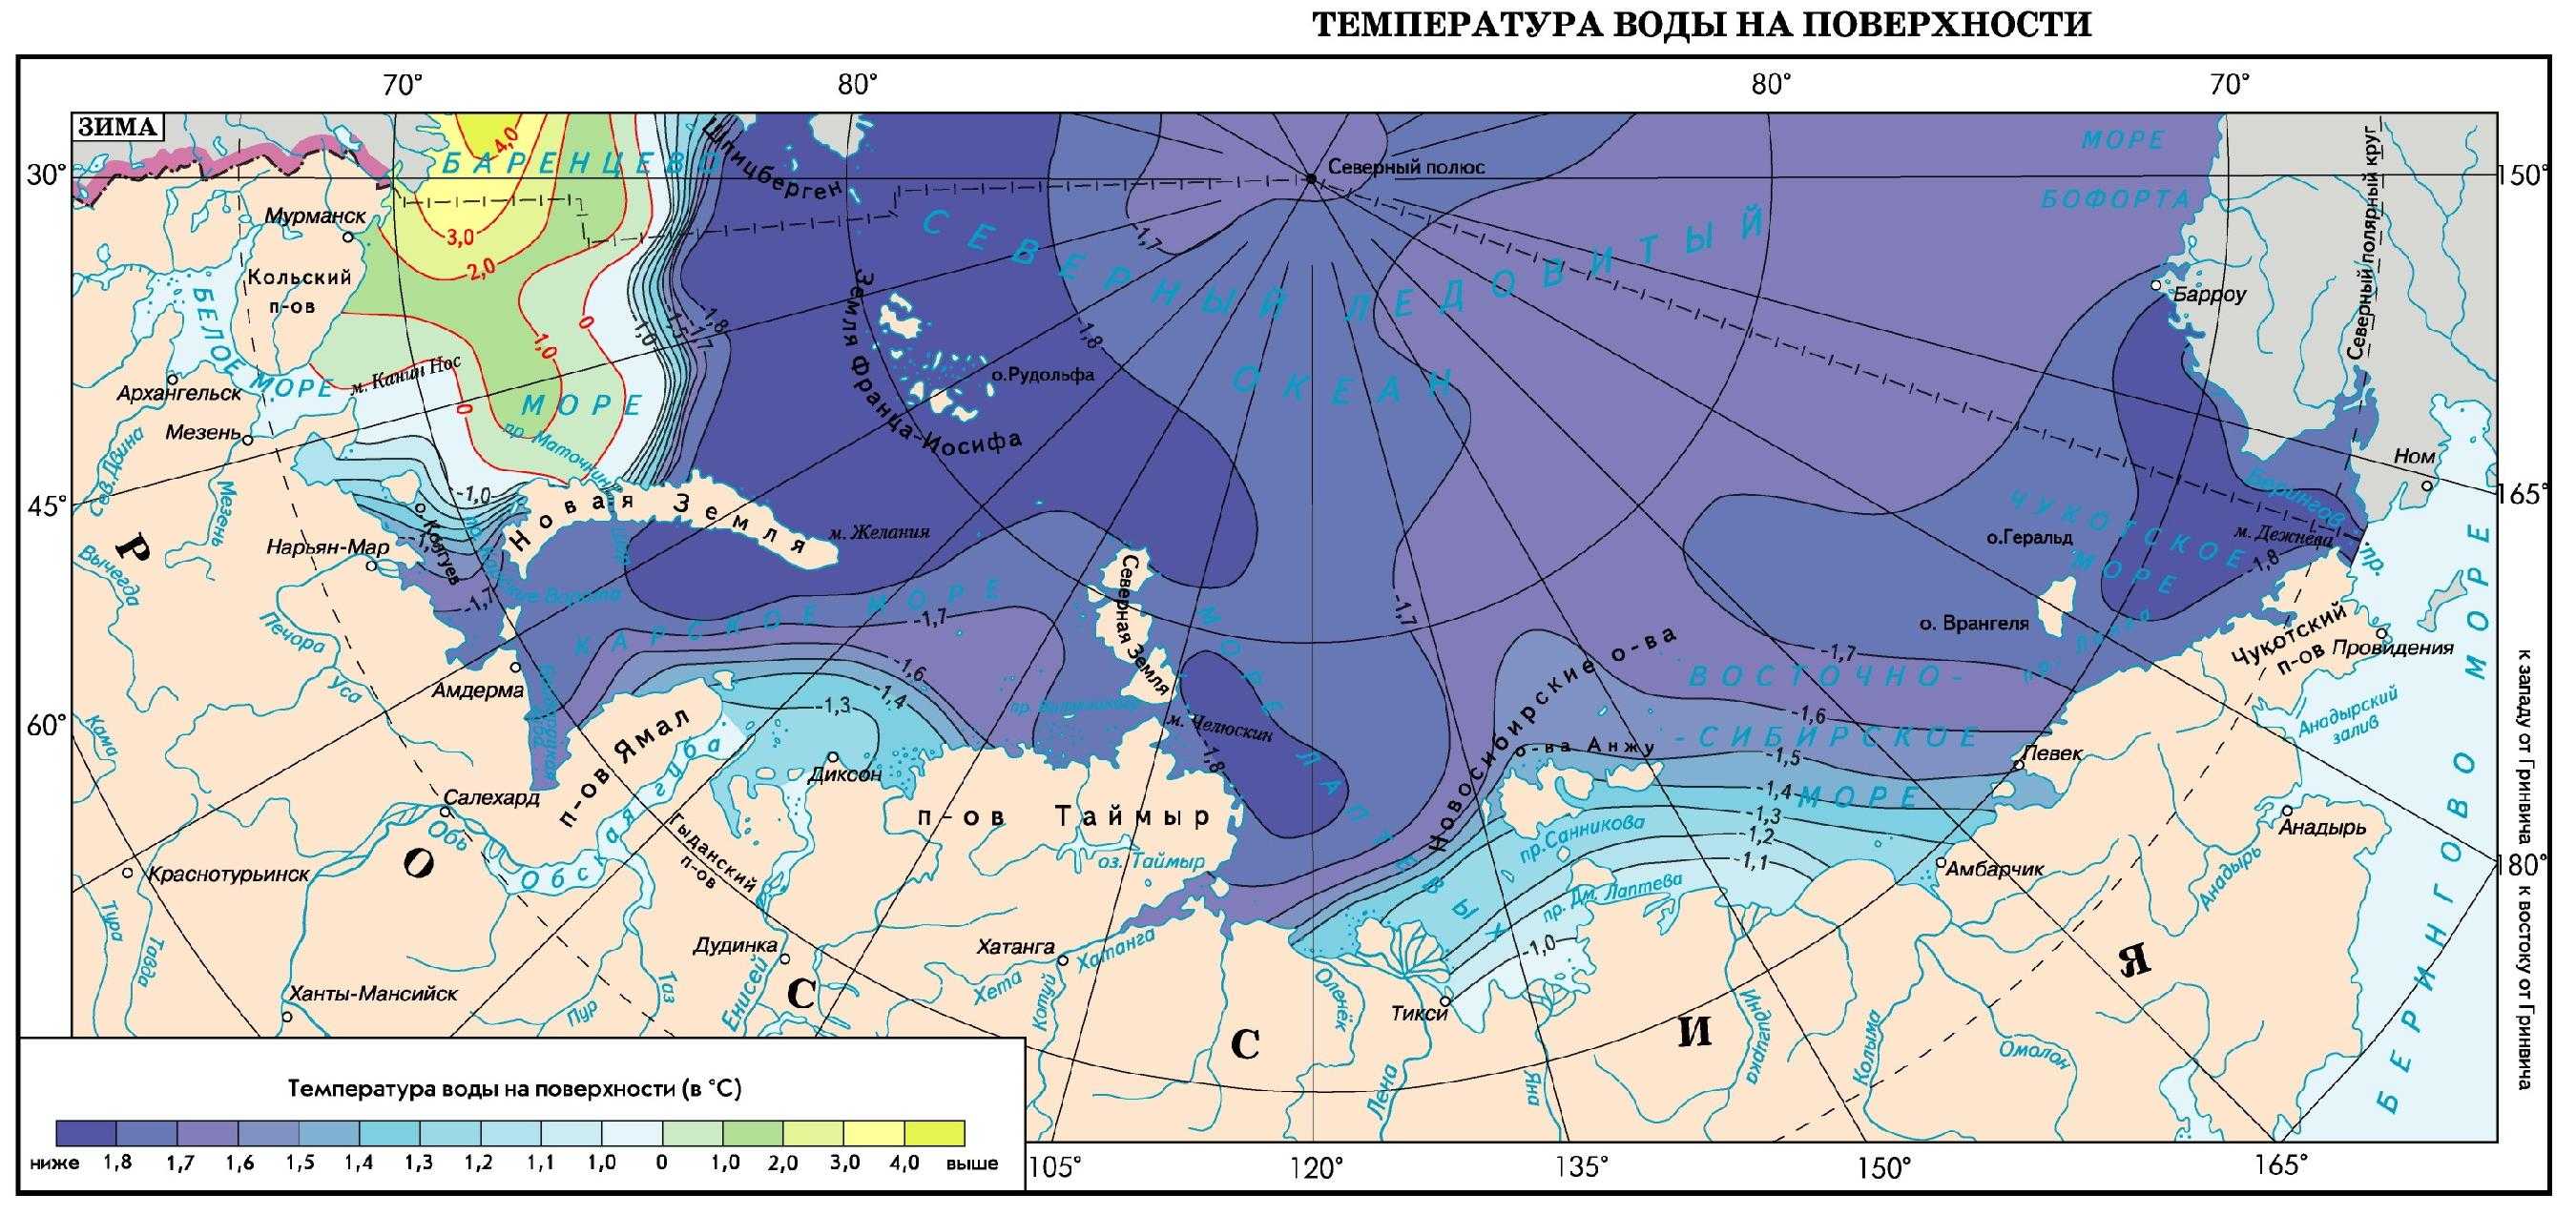 Карта климата Северного Ледовитого океана. Климатическая карта Северного Ледовитого океана. Климатические пояса Северного Ледовитого океана. Климатические пояса Северного Ледовитого океана карта. Баренцево море бассейн океана